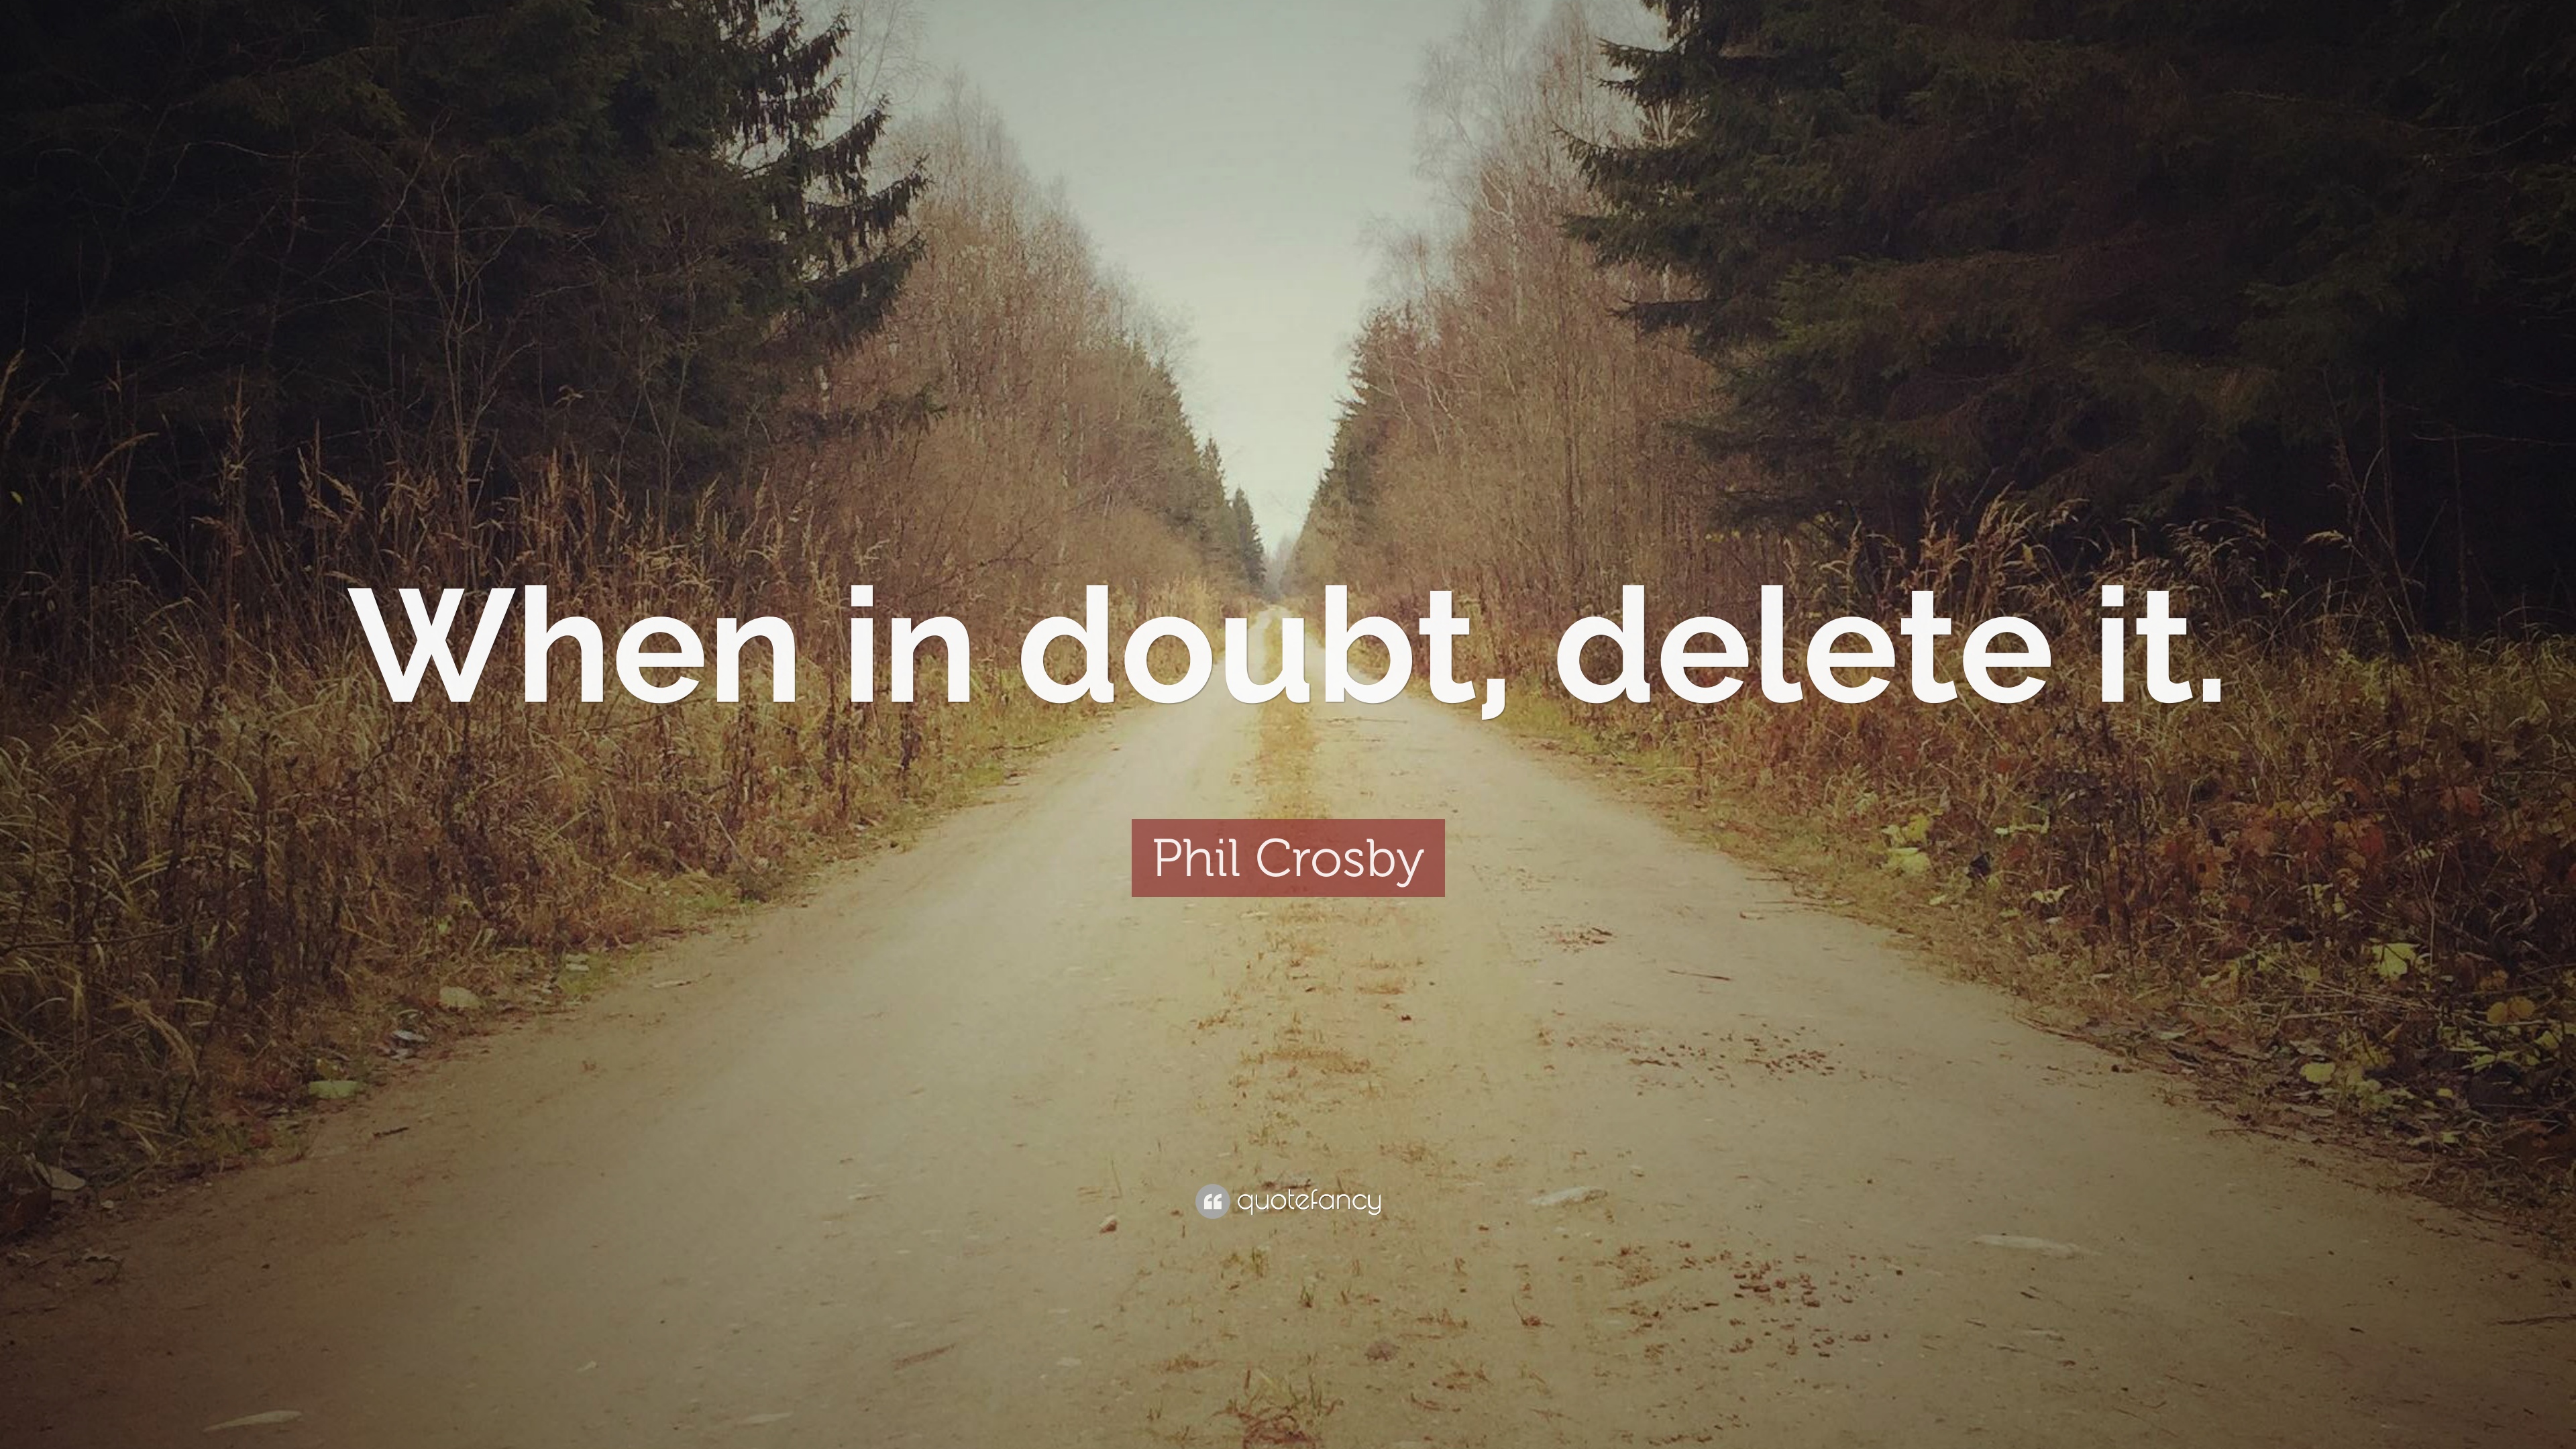 Phil Crosby Quote: “When in doubt, delete it.” 12 wallpaper